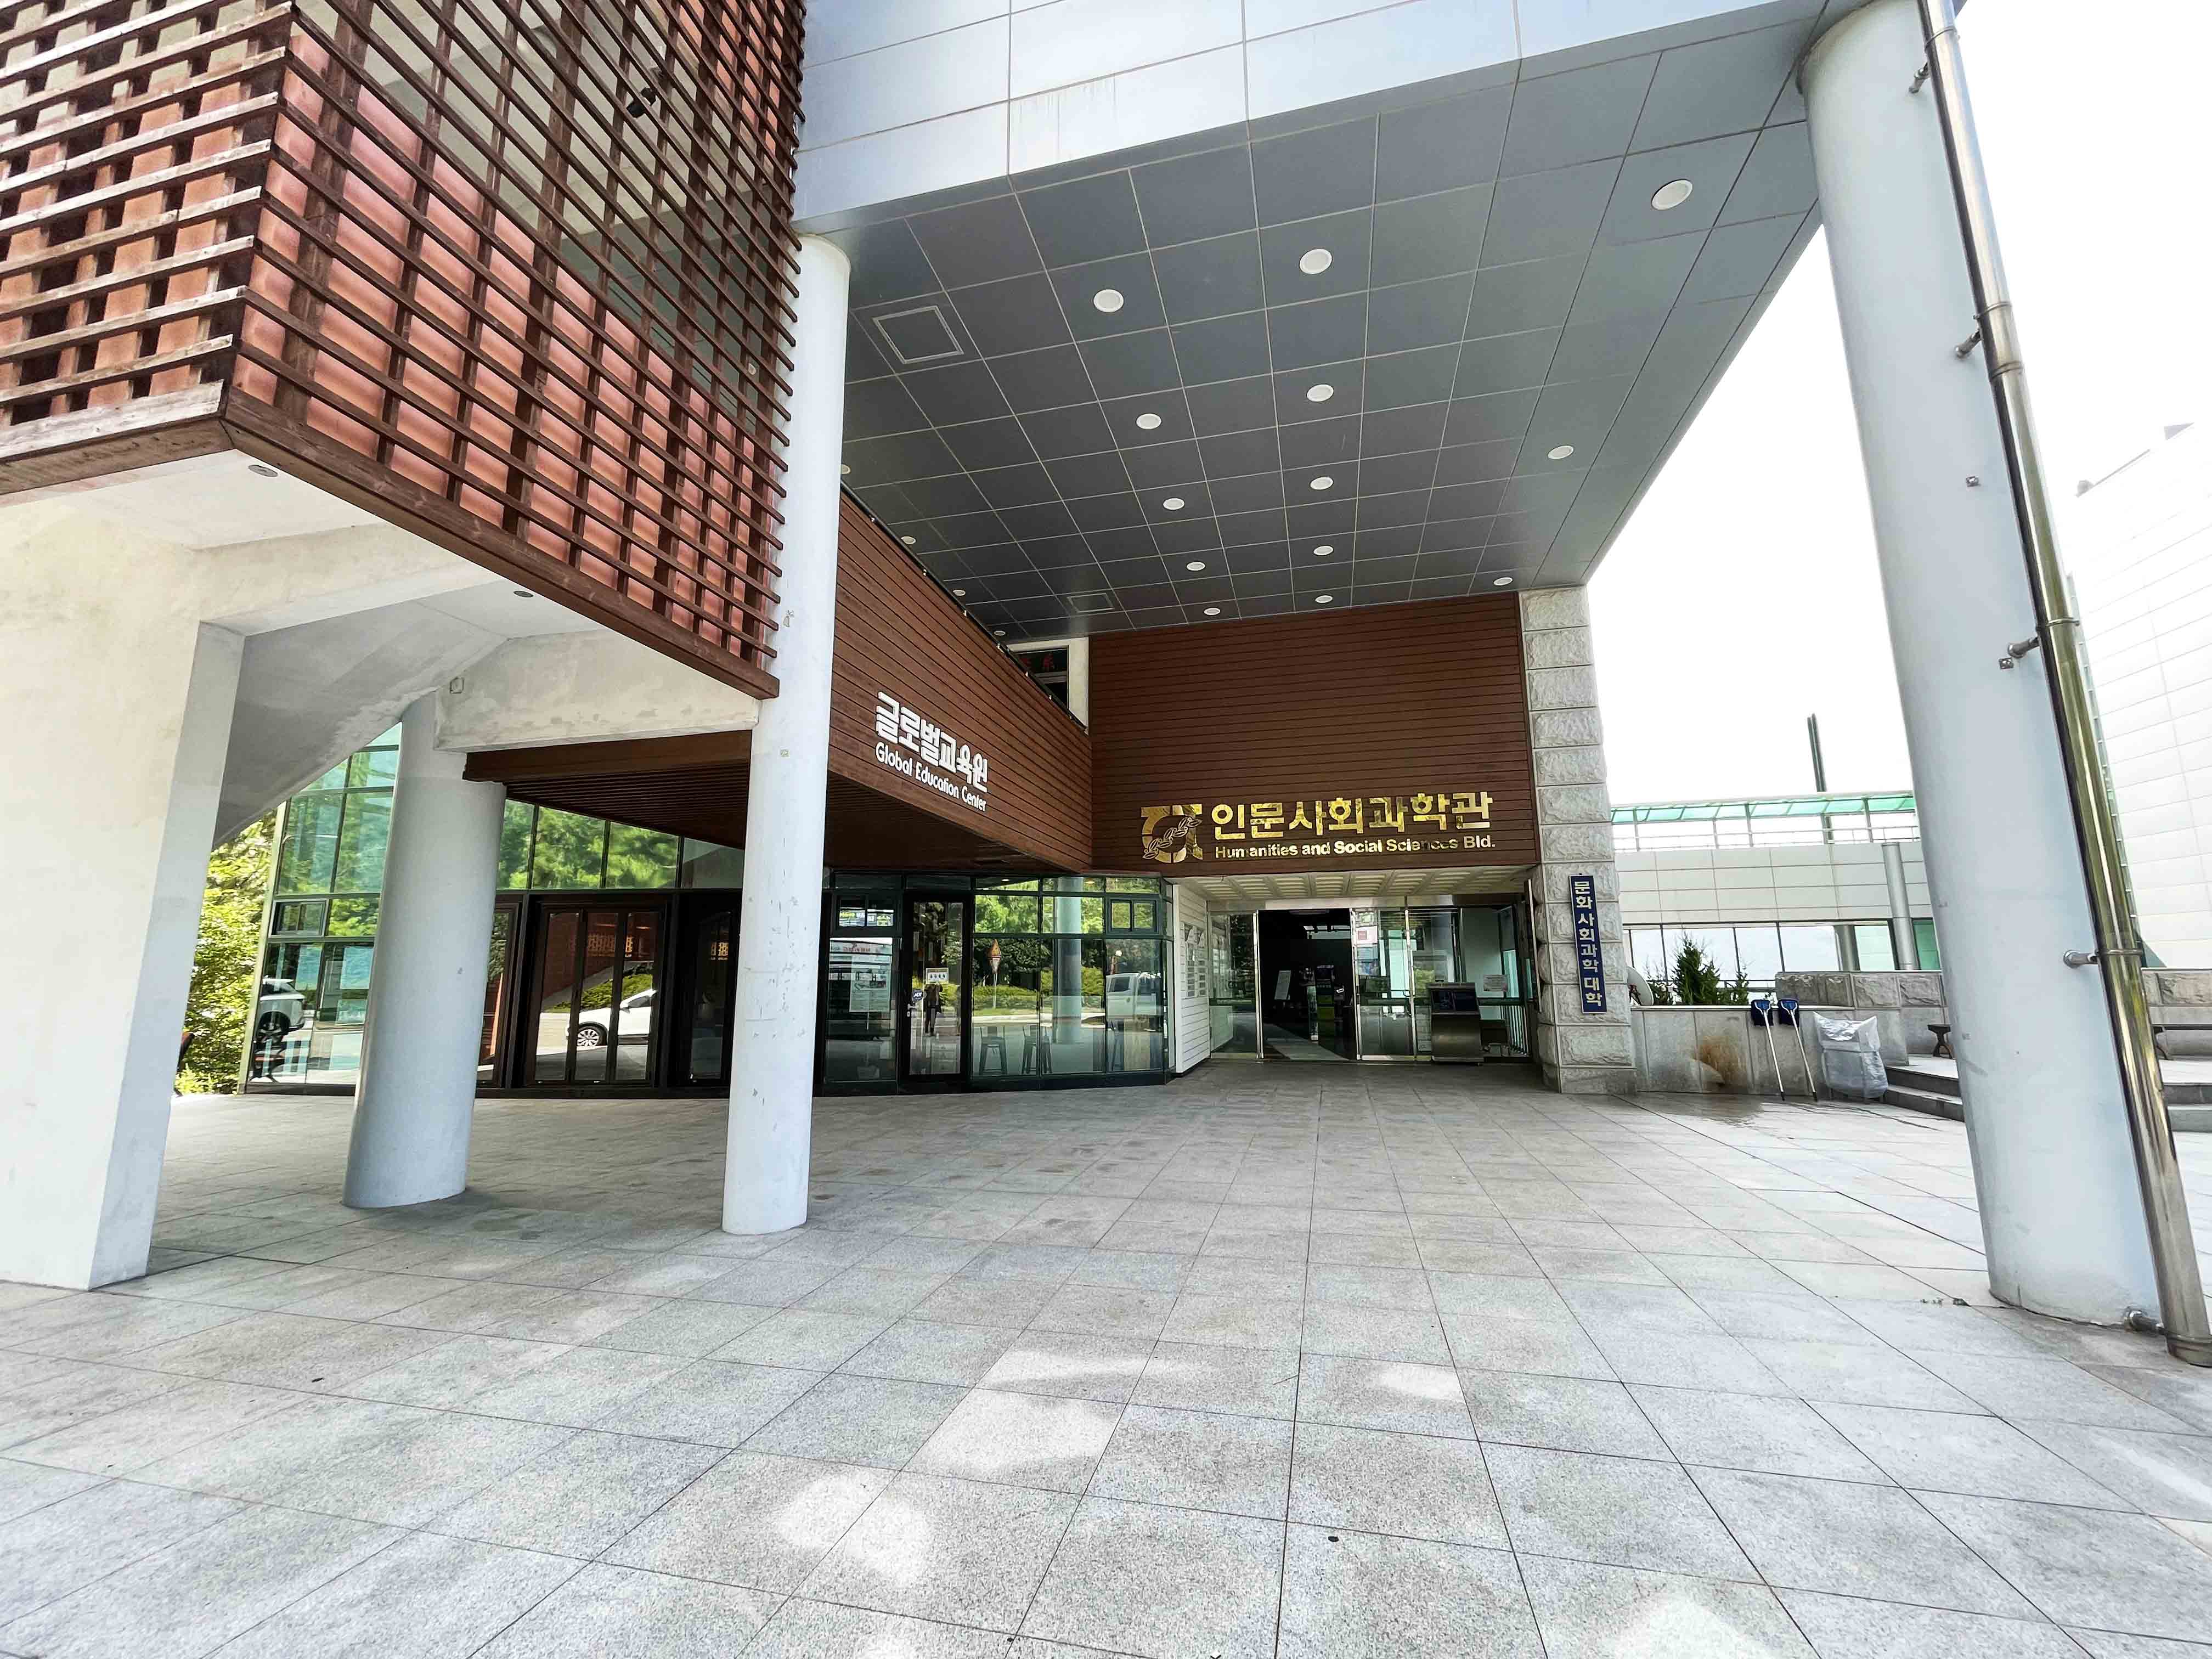 Global Education Center building on the CNU Yeosu campus in Yeosu, Korea.